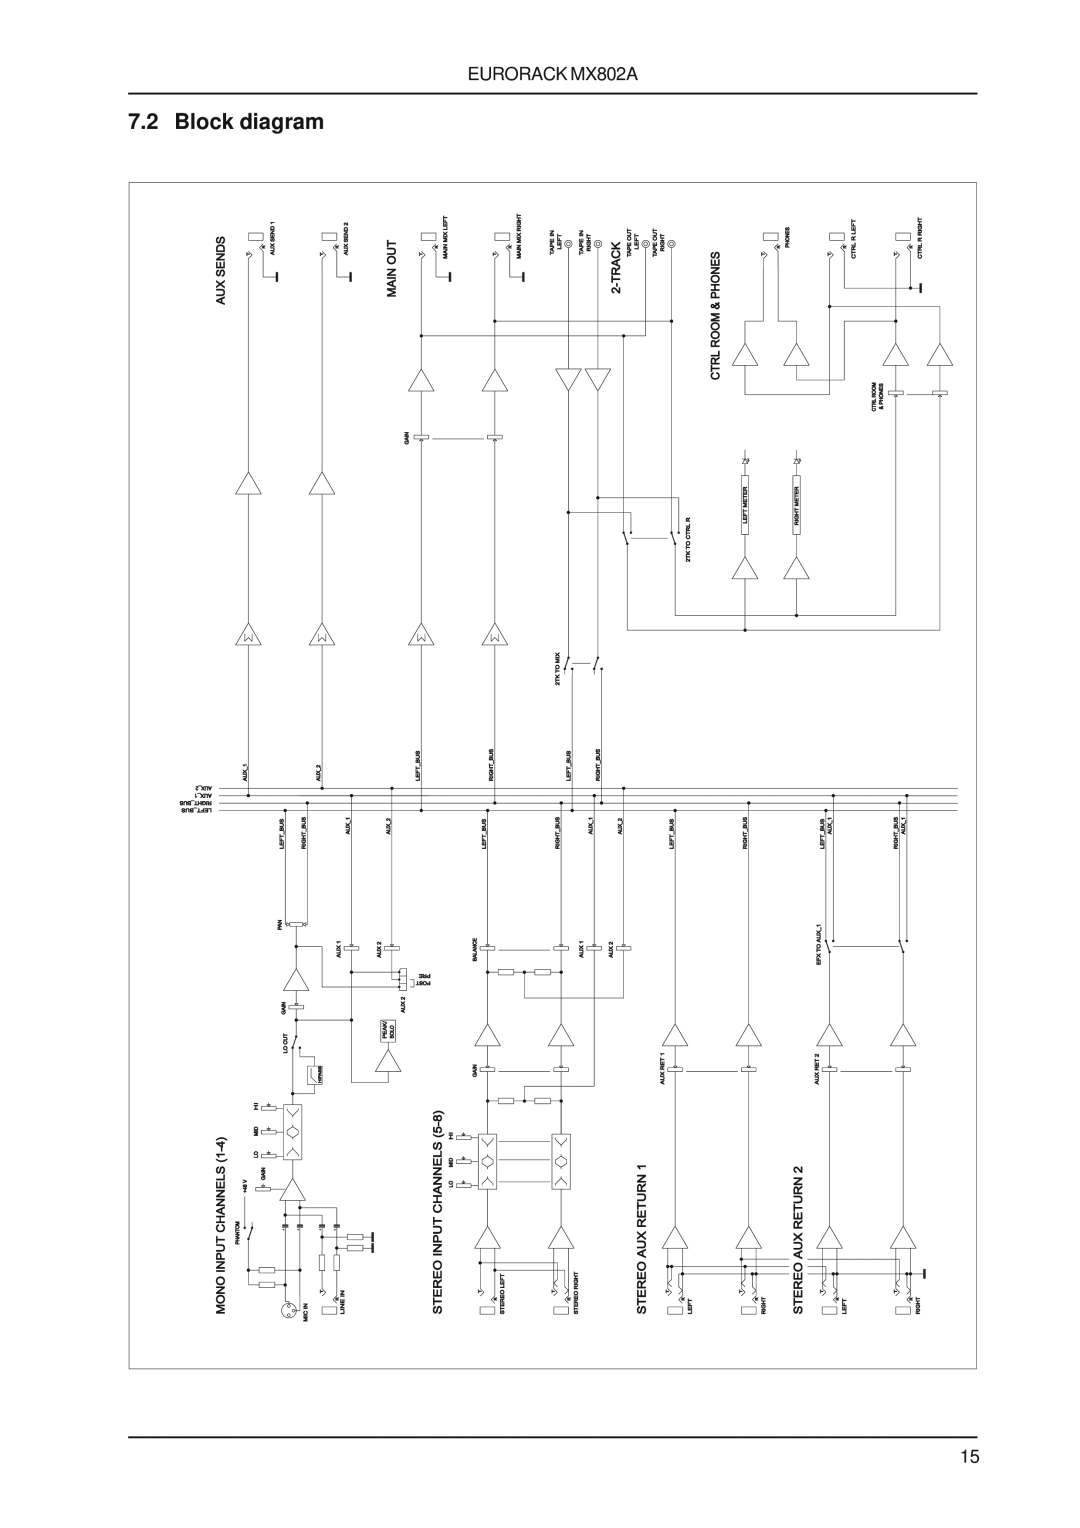 Behringer user manual Block diagram, EURORACK MX802A 